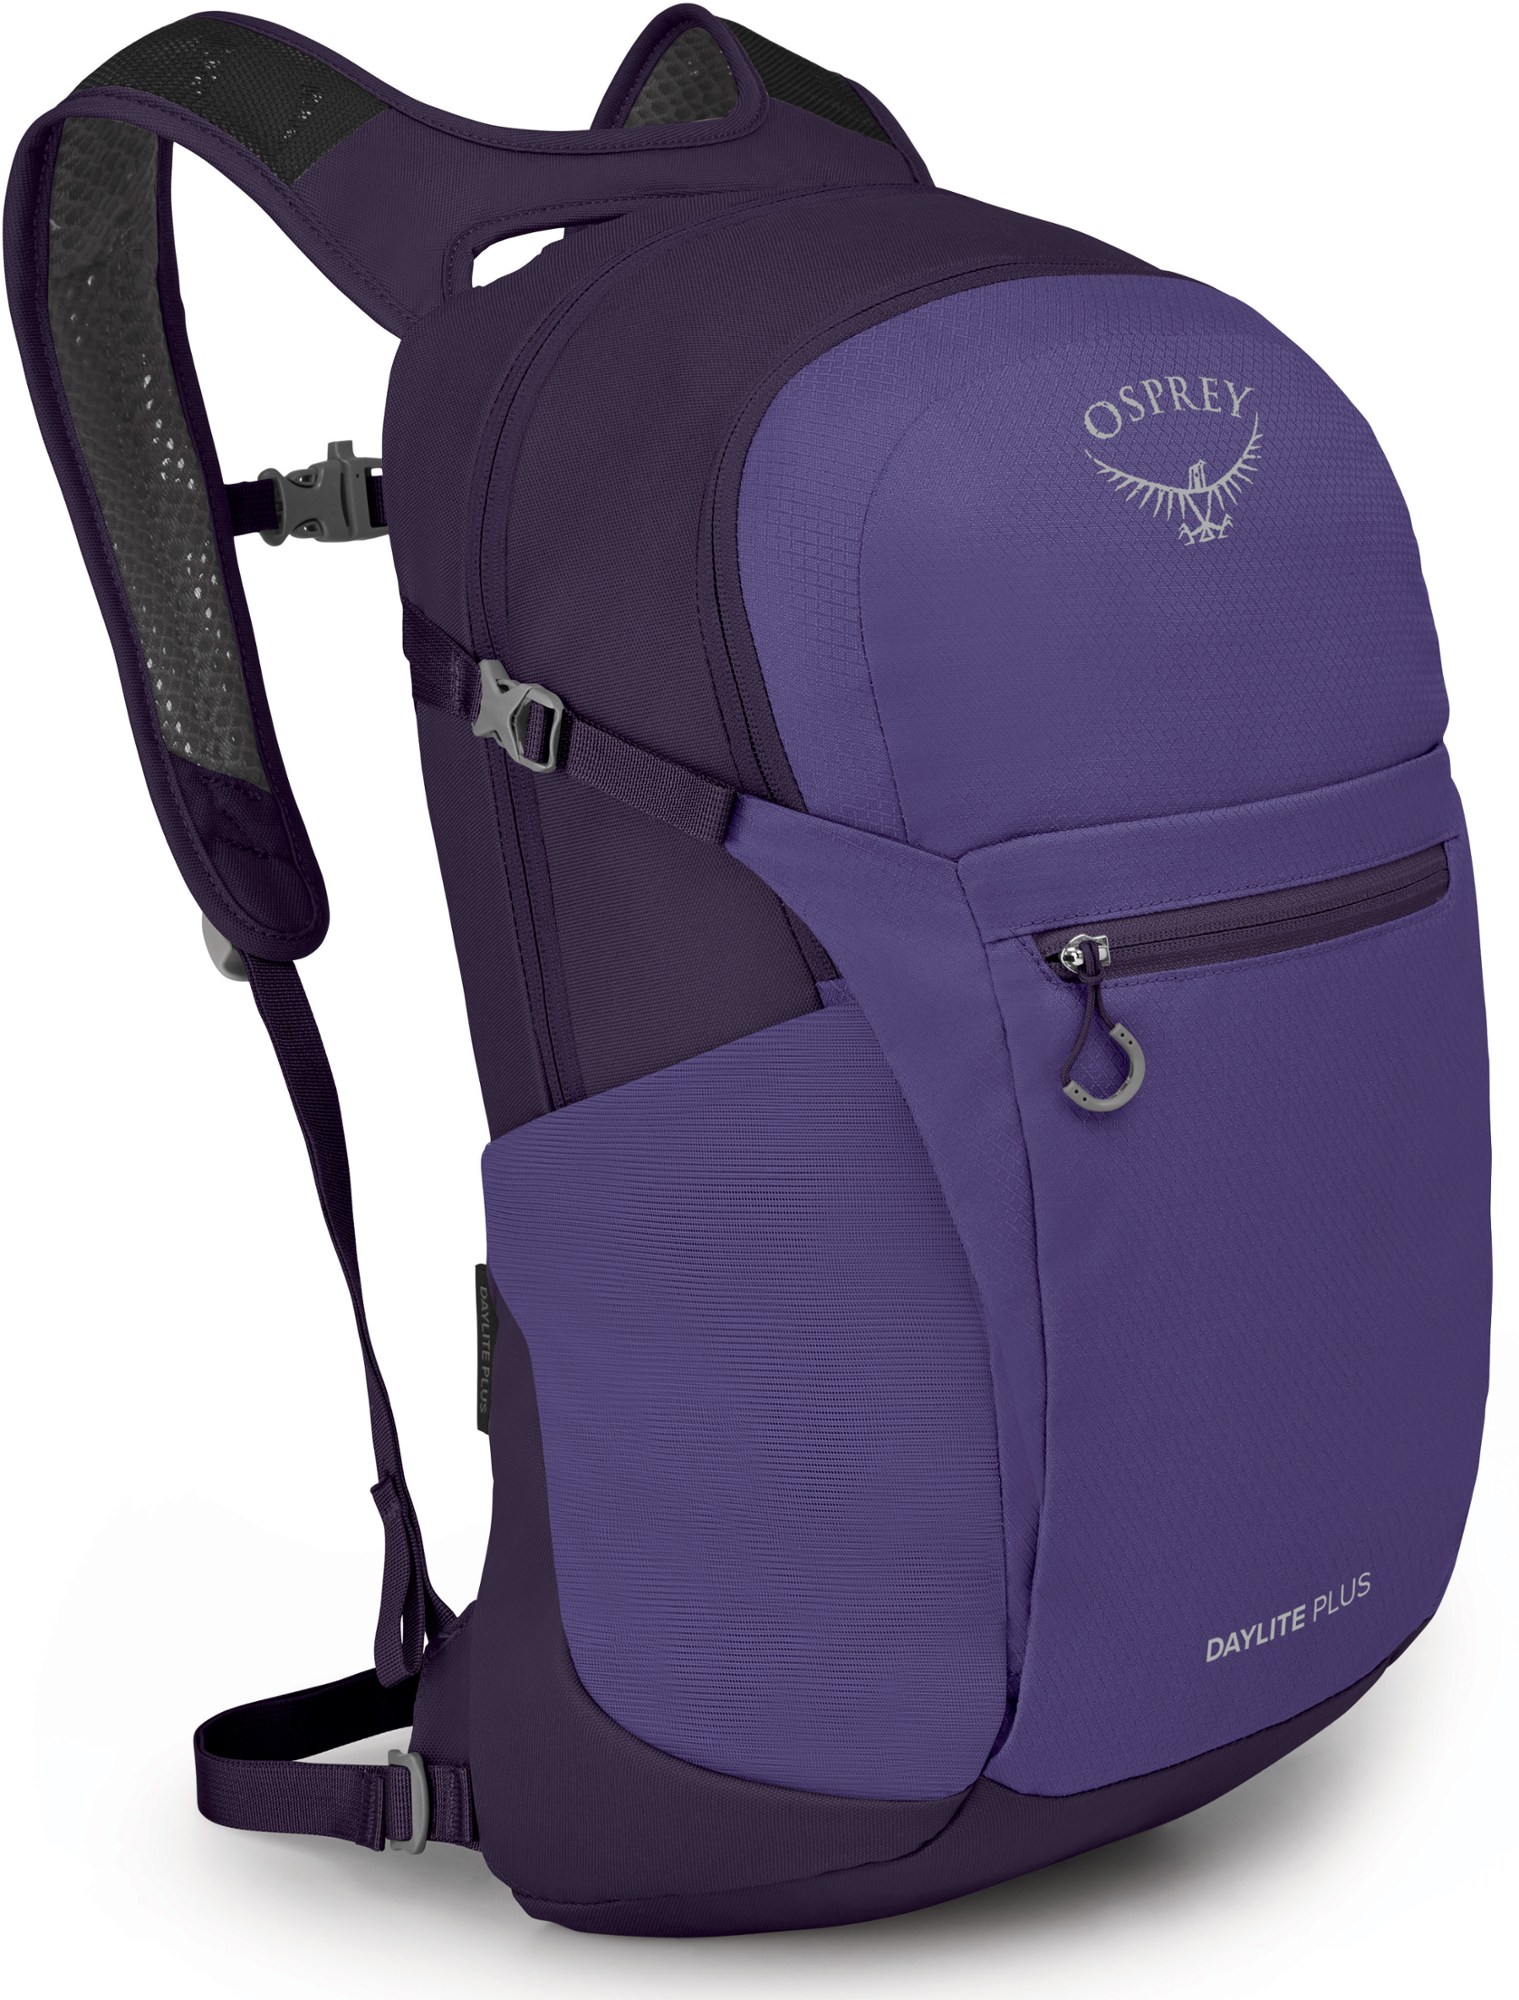 Пакет Daylite Plus Osprey, фиолетовый